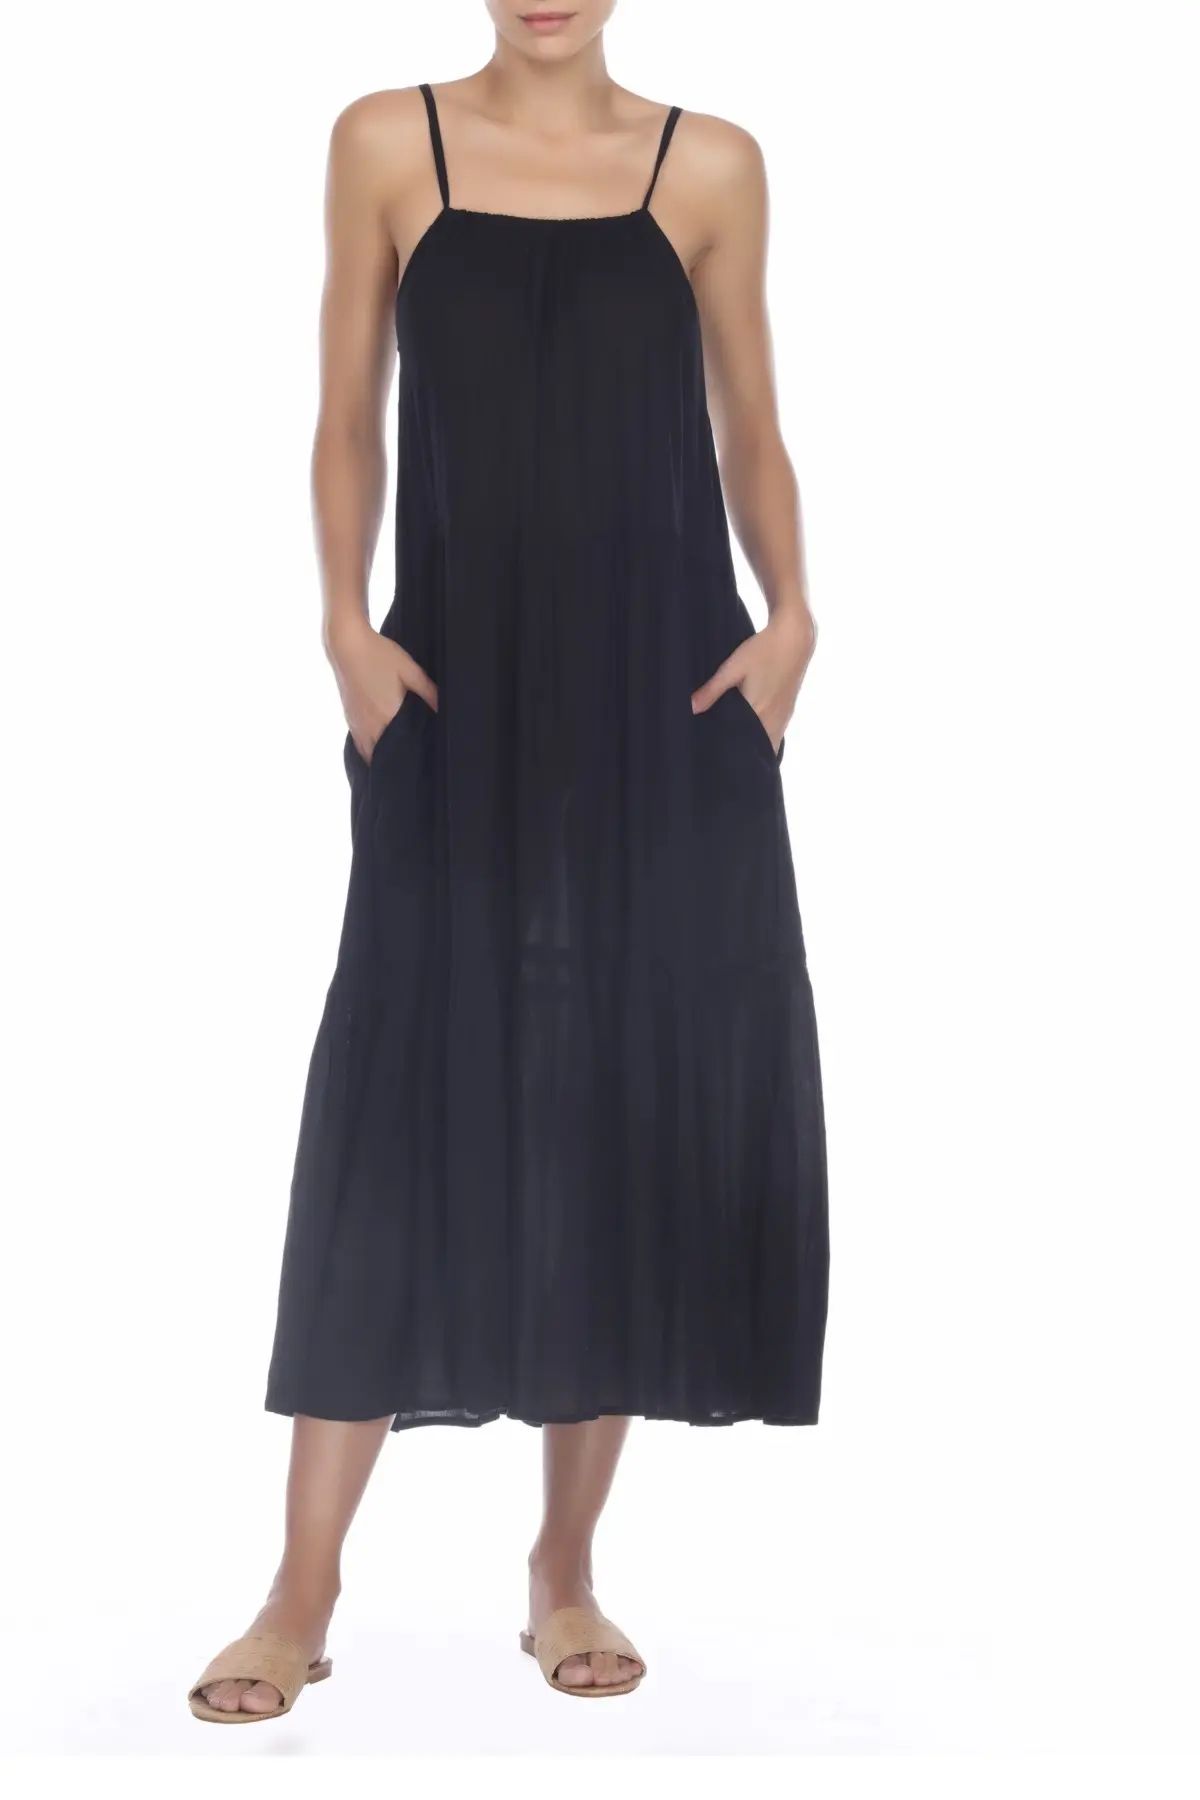 BOHO ME Tiered Pocket Maxi Dress at Nordstrom Rack | Hautelook